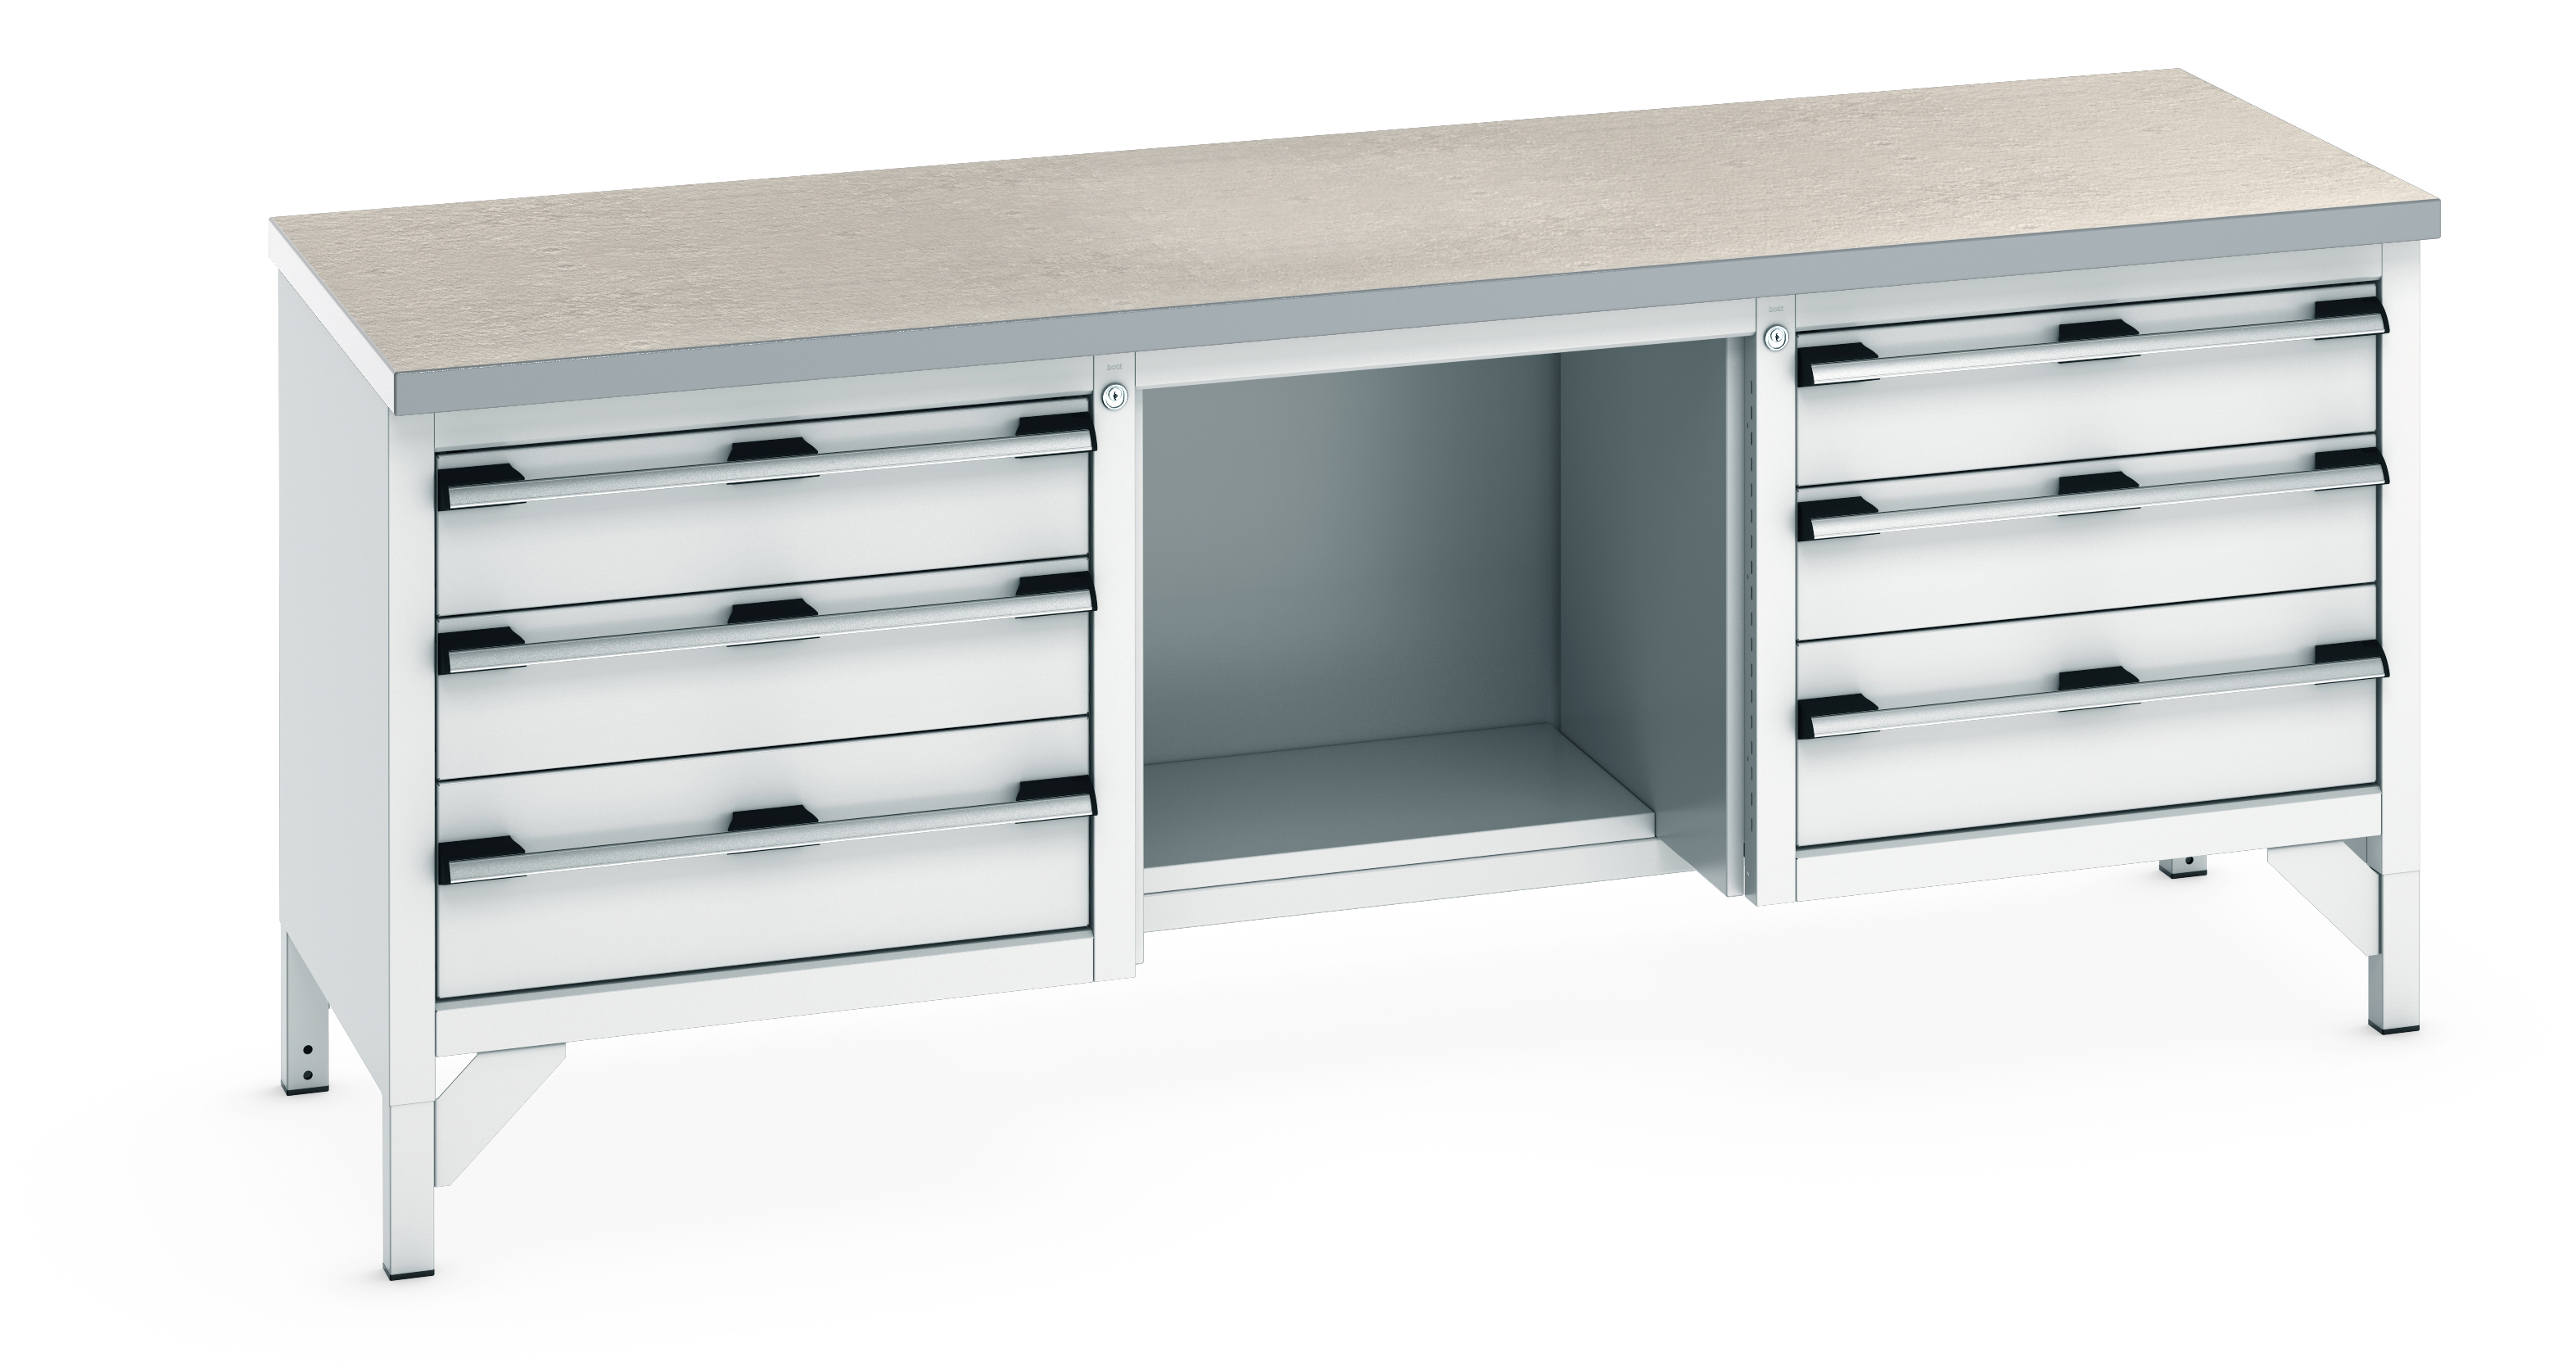 Bott Cubio Storage Bench With 3 Drawer Cabinet / Open With Half Depth Base Shelf / 3 Drawer Cabinet - 41002075.16V